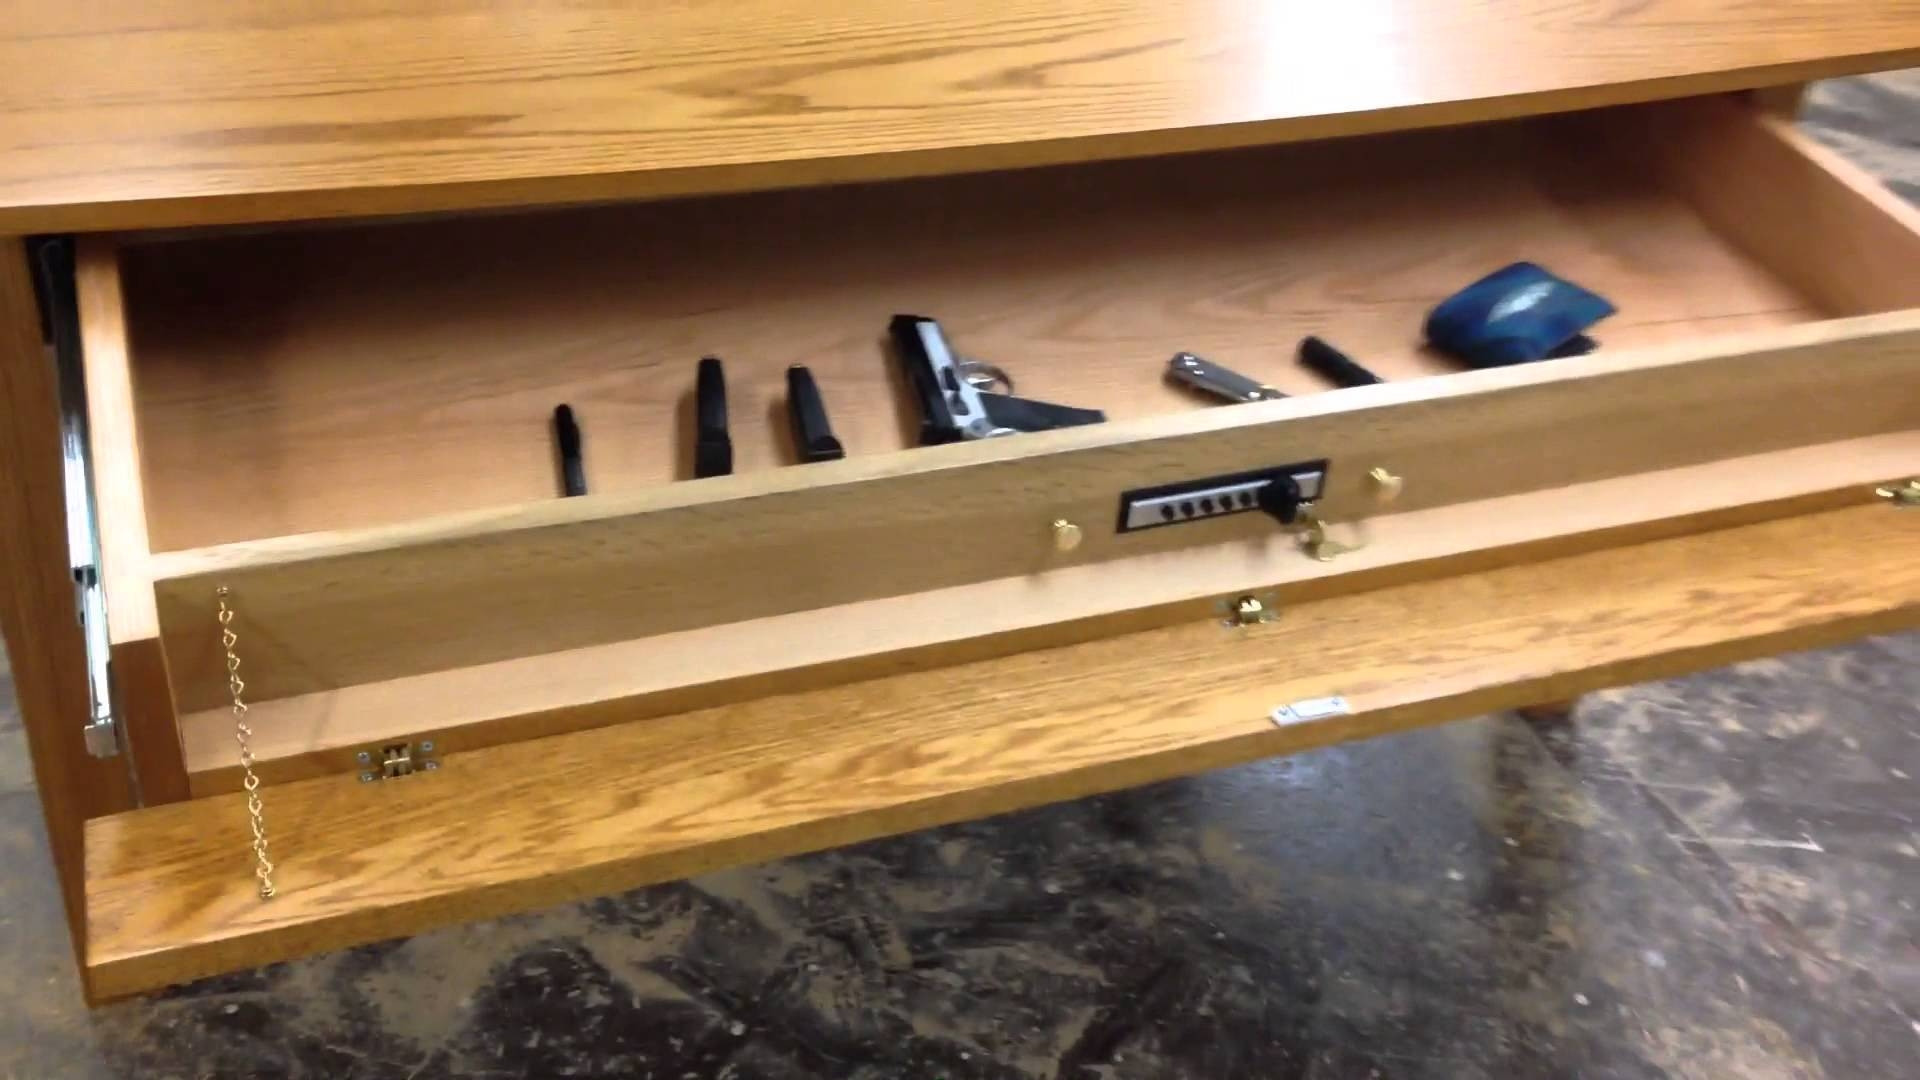 Best ideas about DIY Hidden Gun Storage
. Save or Pin 20 Best of Gun Cabinet Coffee Table Plans Now.